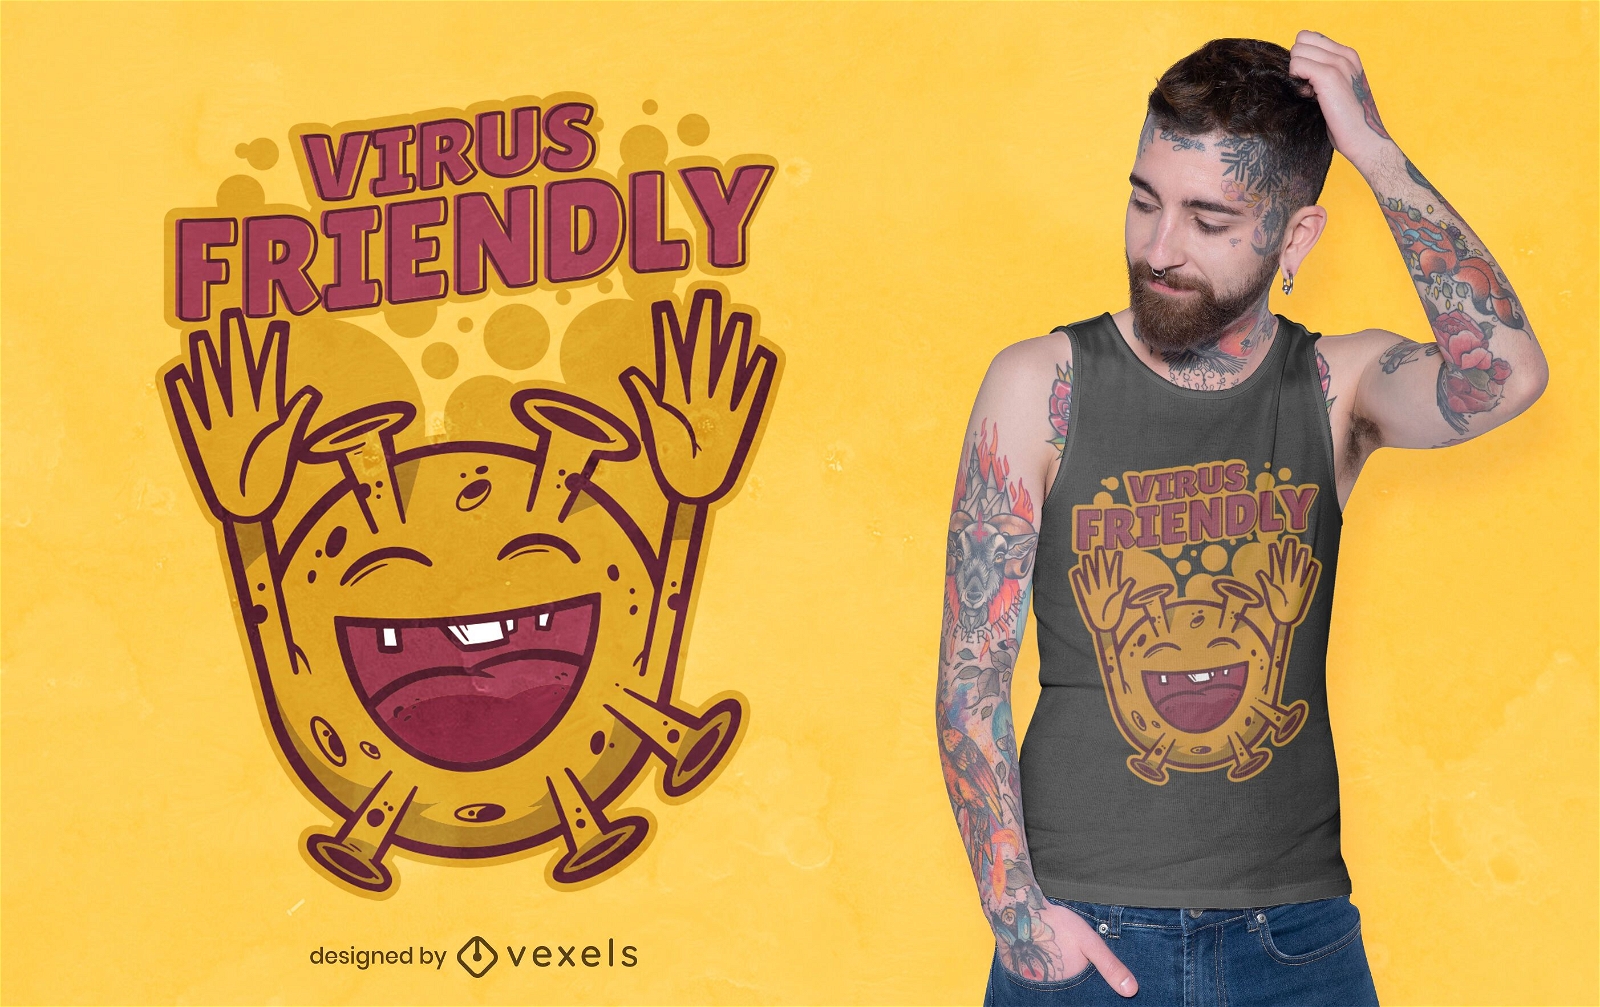 Virus friendly t-shirt design